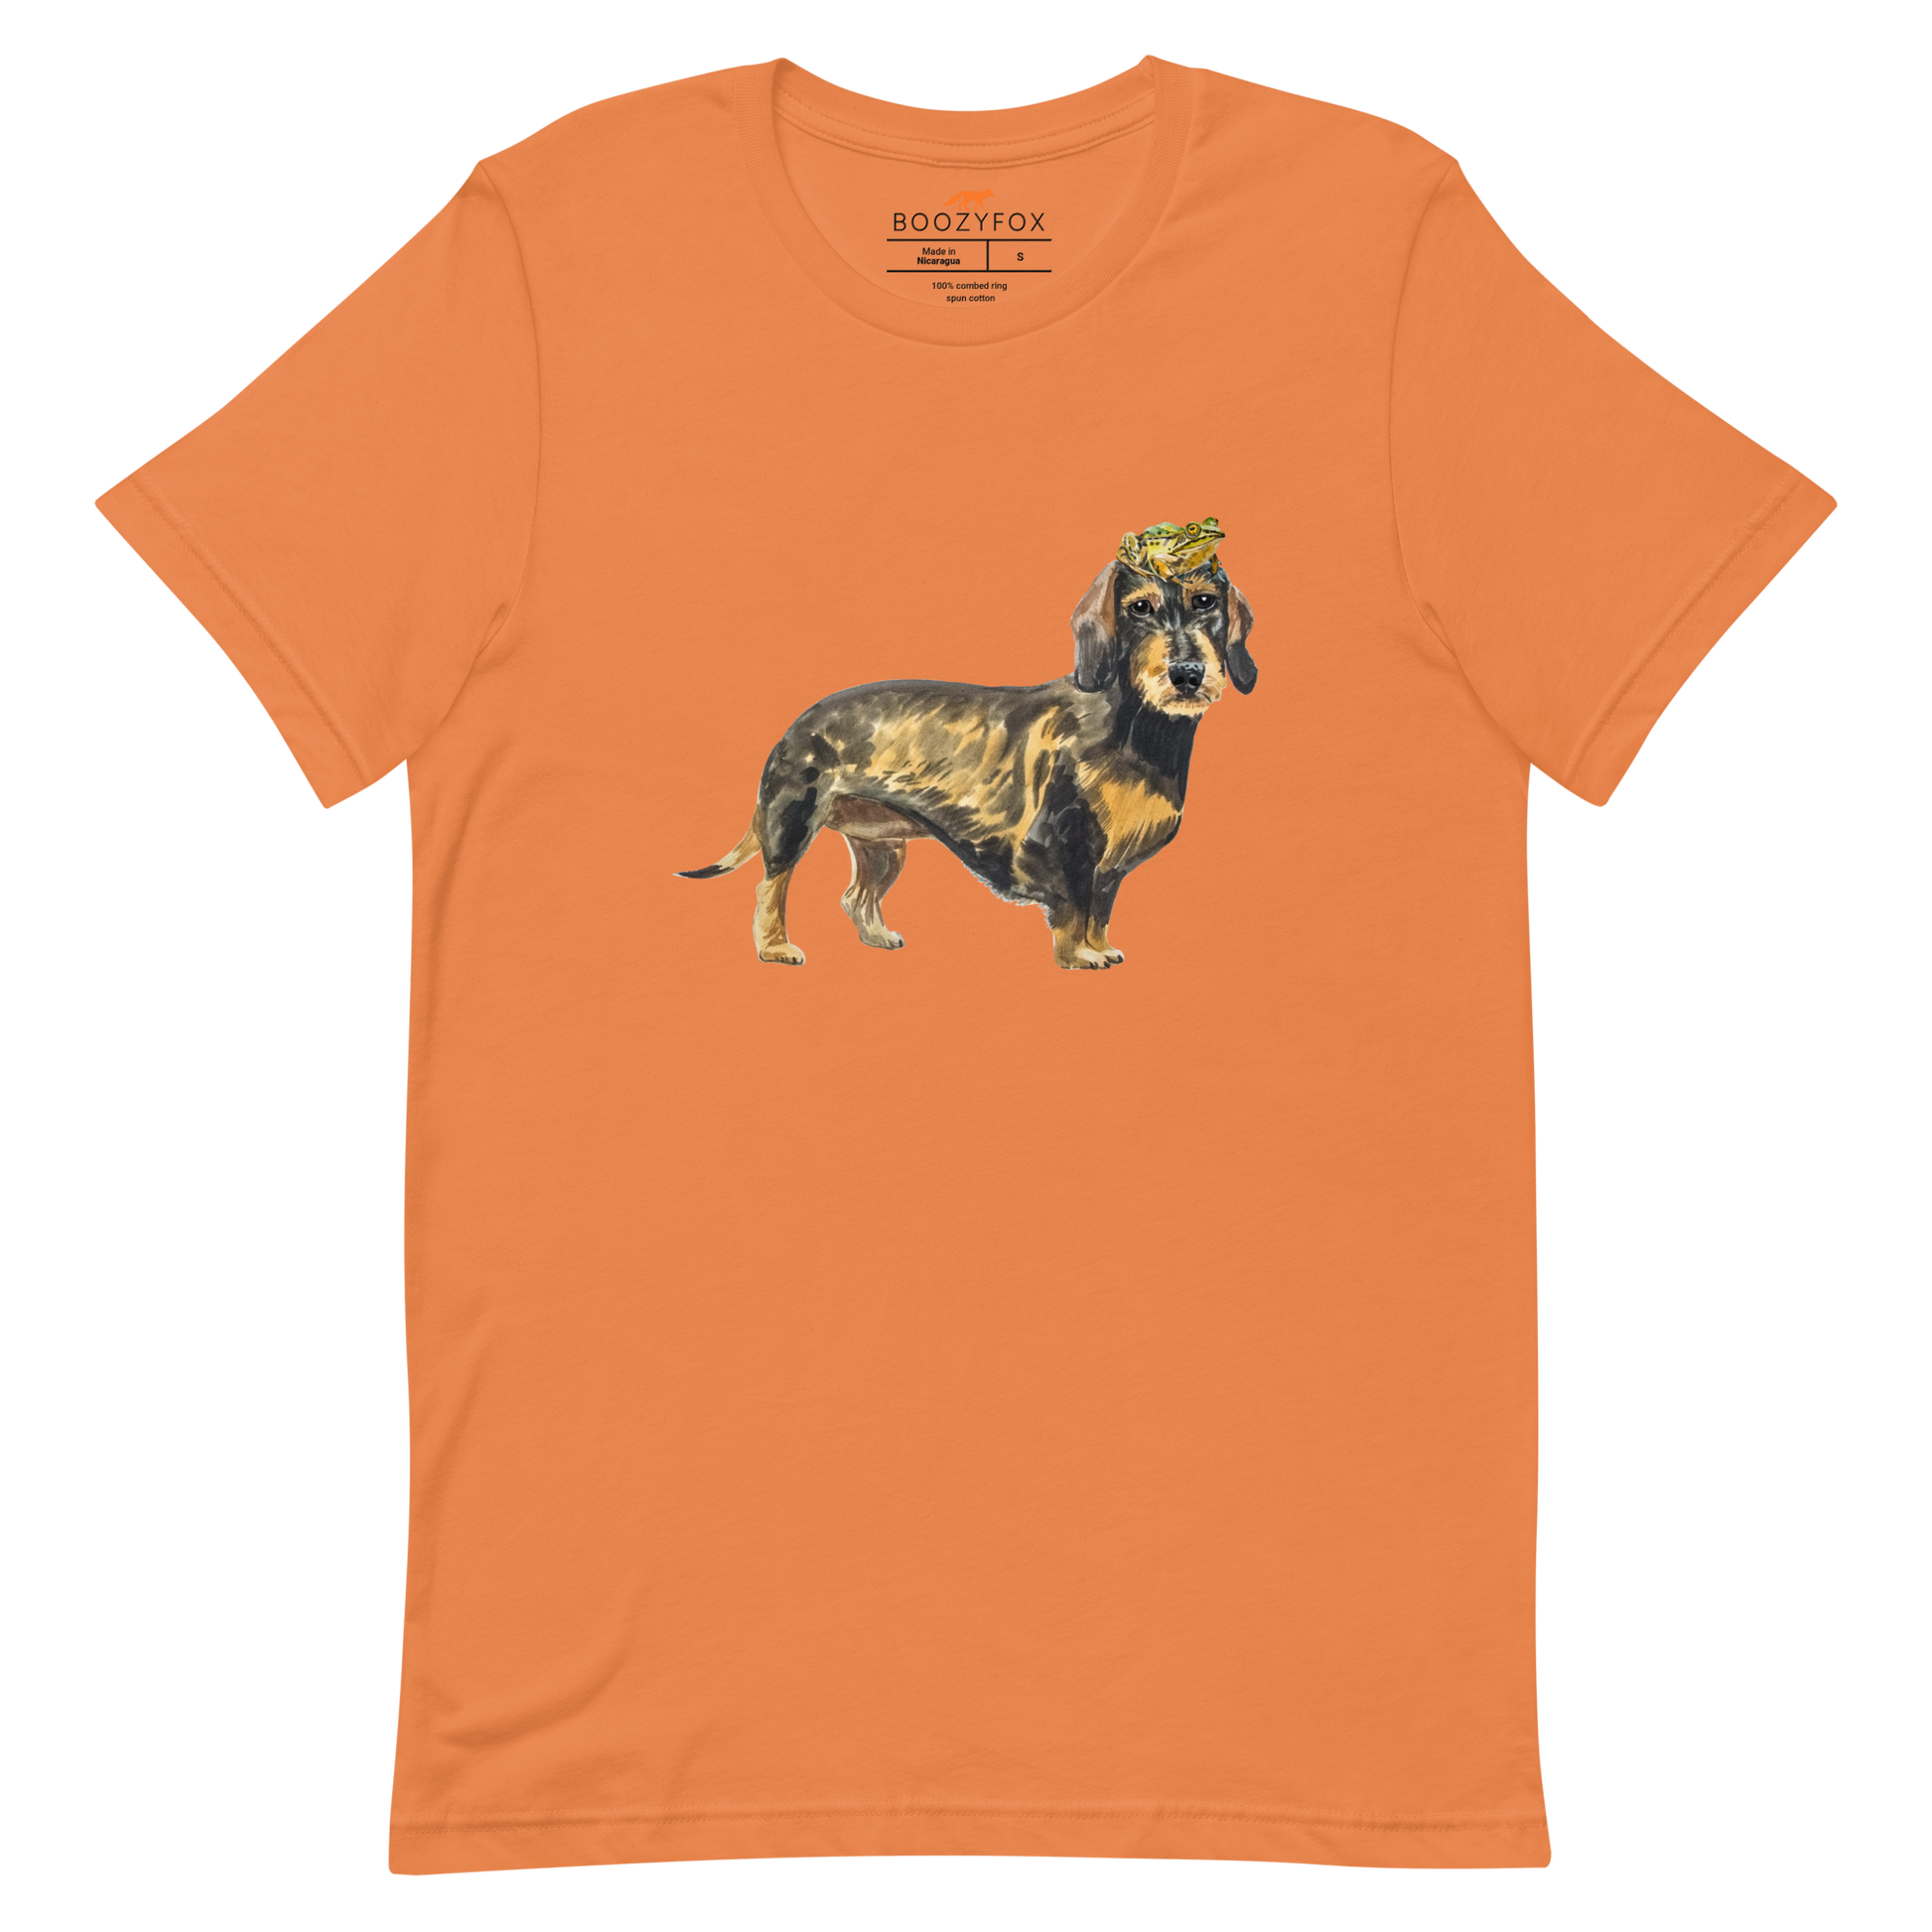 Burnt Orange Premium Dachshund T-Shirt featuring an adorable Frog on a Dachshund's Head graphic on the chest - Cute Graphic Dachshund Tees - Boozy Fox